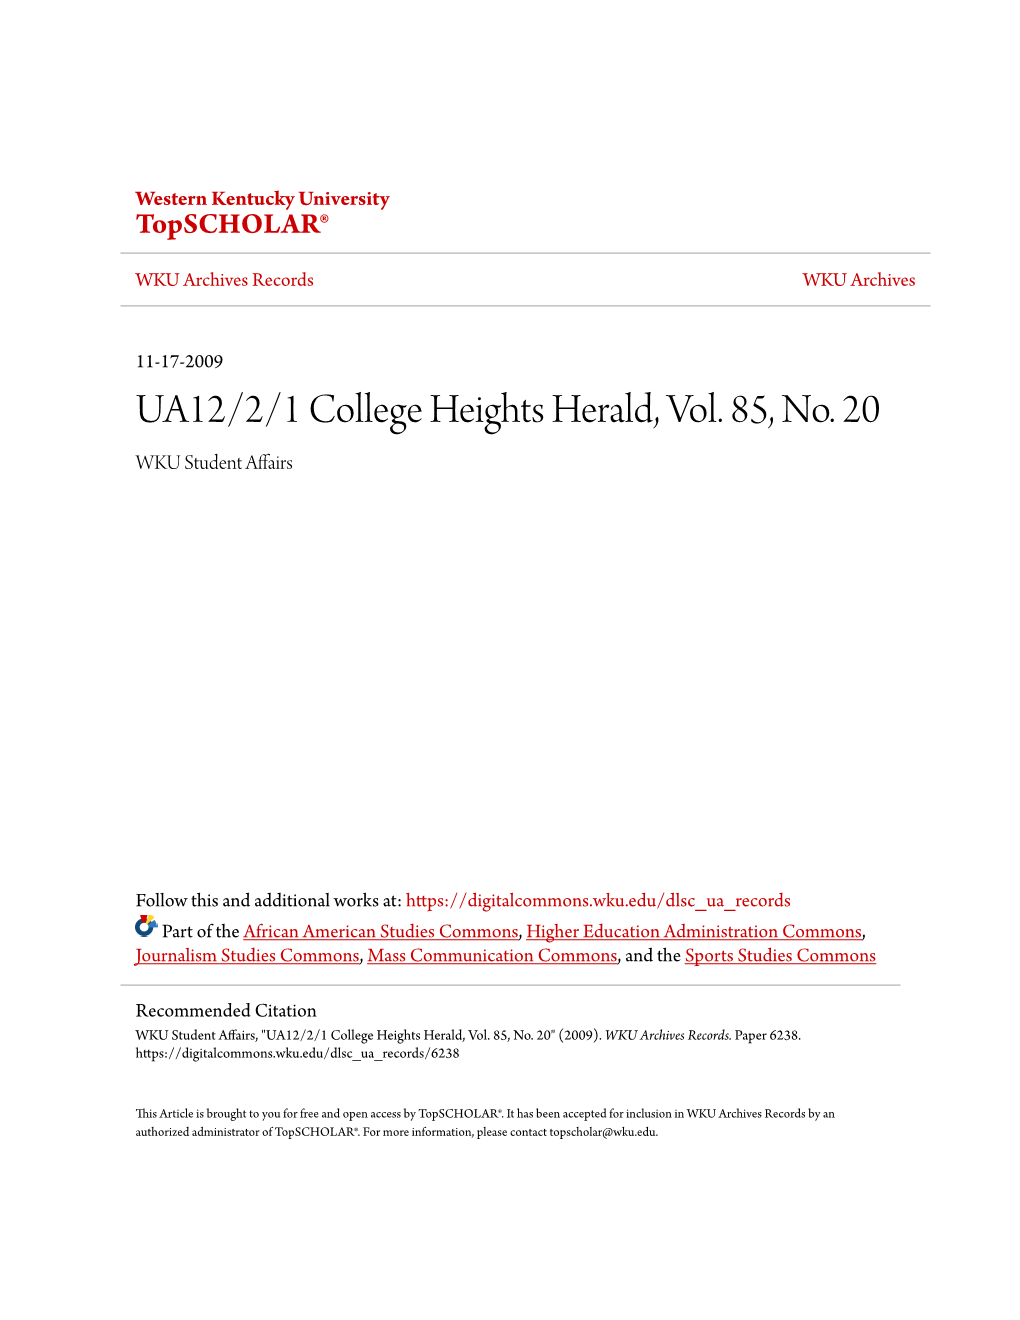 UA12/2/1 College Heights Herald, Vol. 85, No. 20 WKU Student Affairs